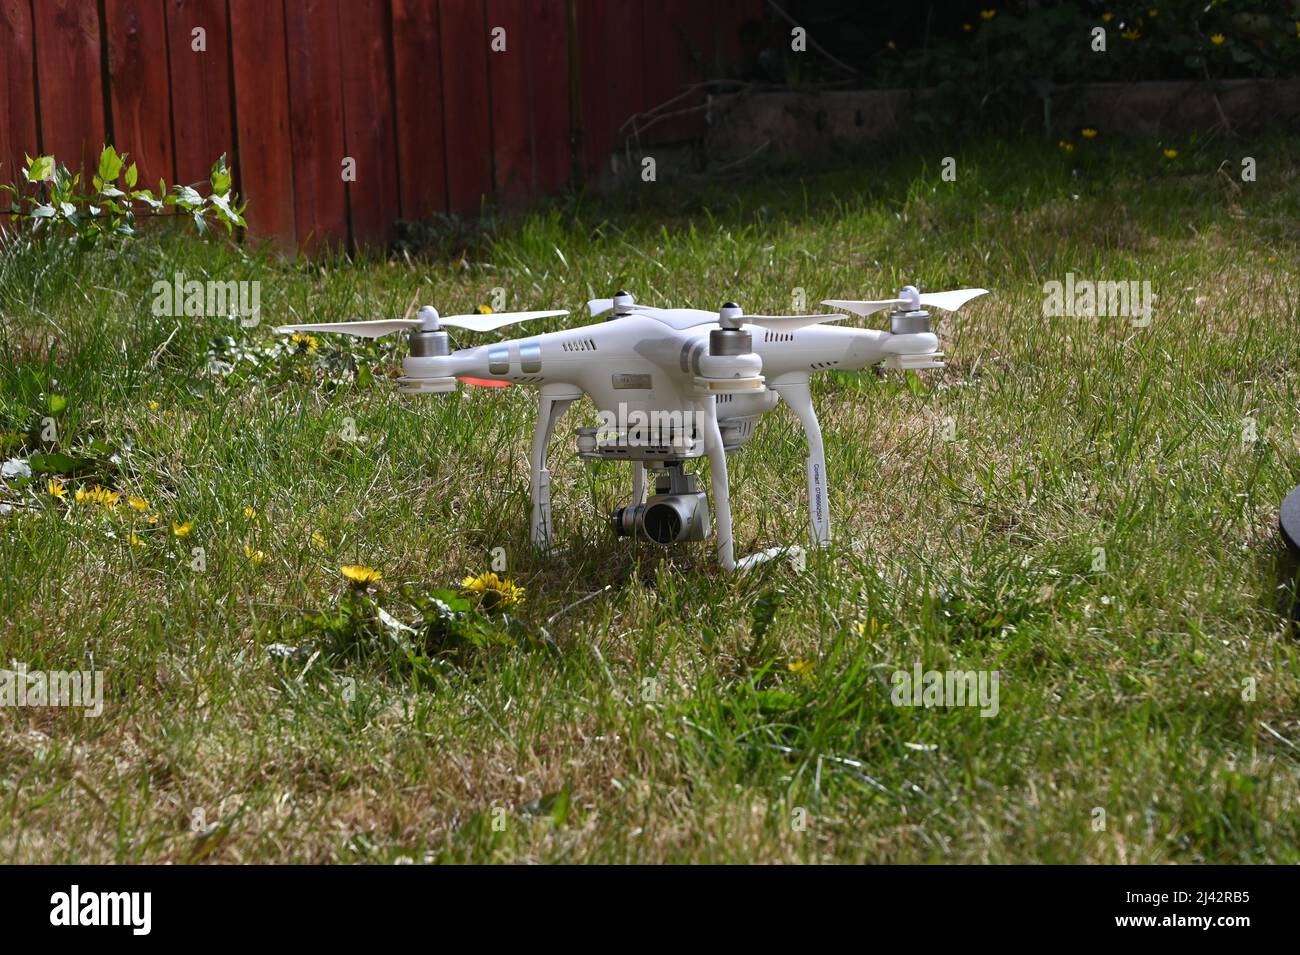 UAV Camara drone, used for surveillance and intelligence gathering Stock Photo